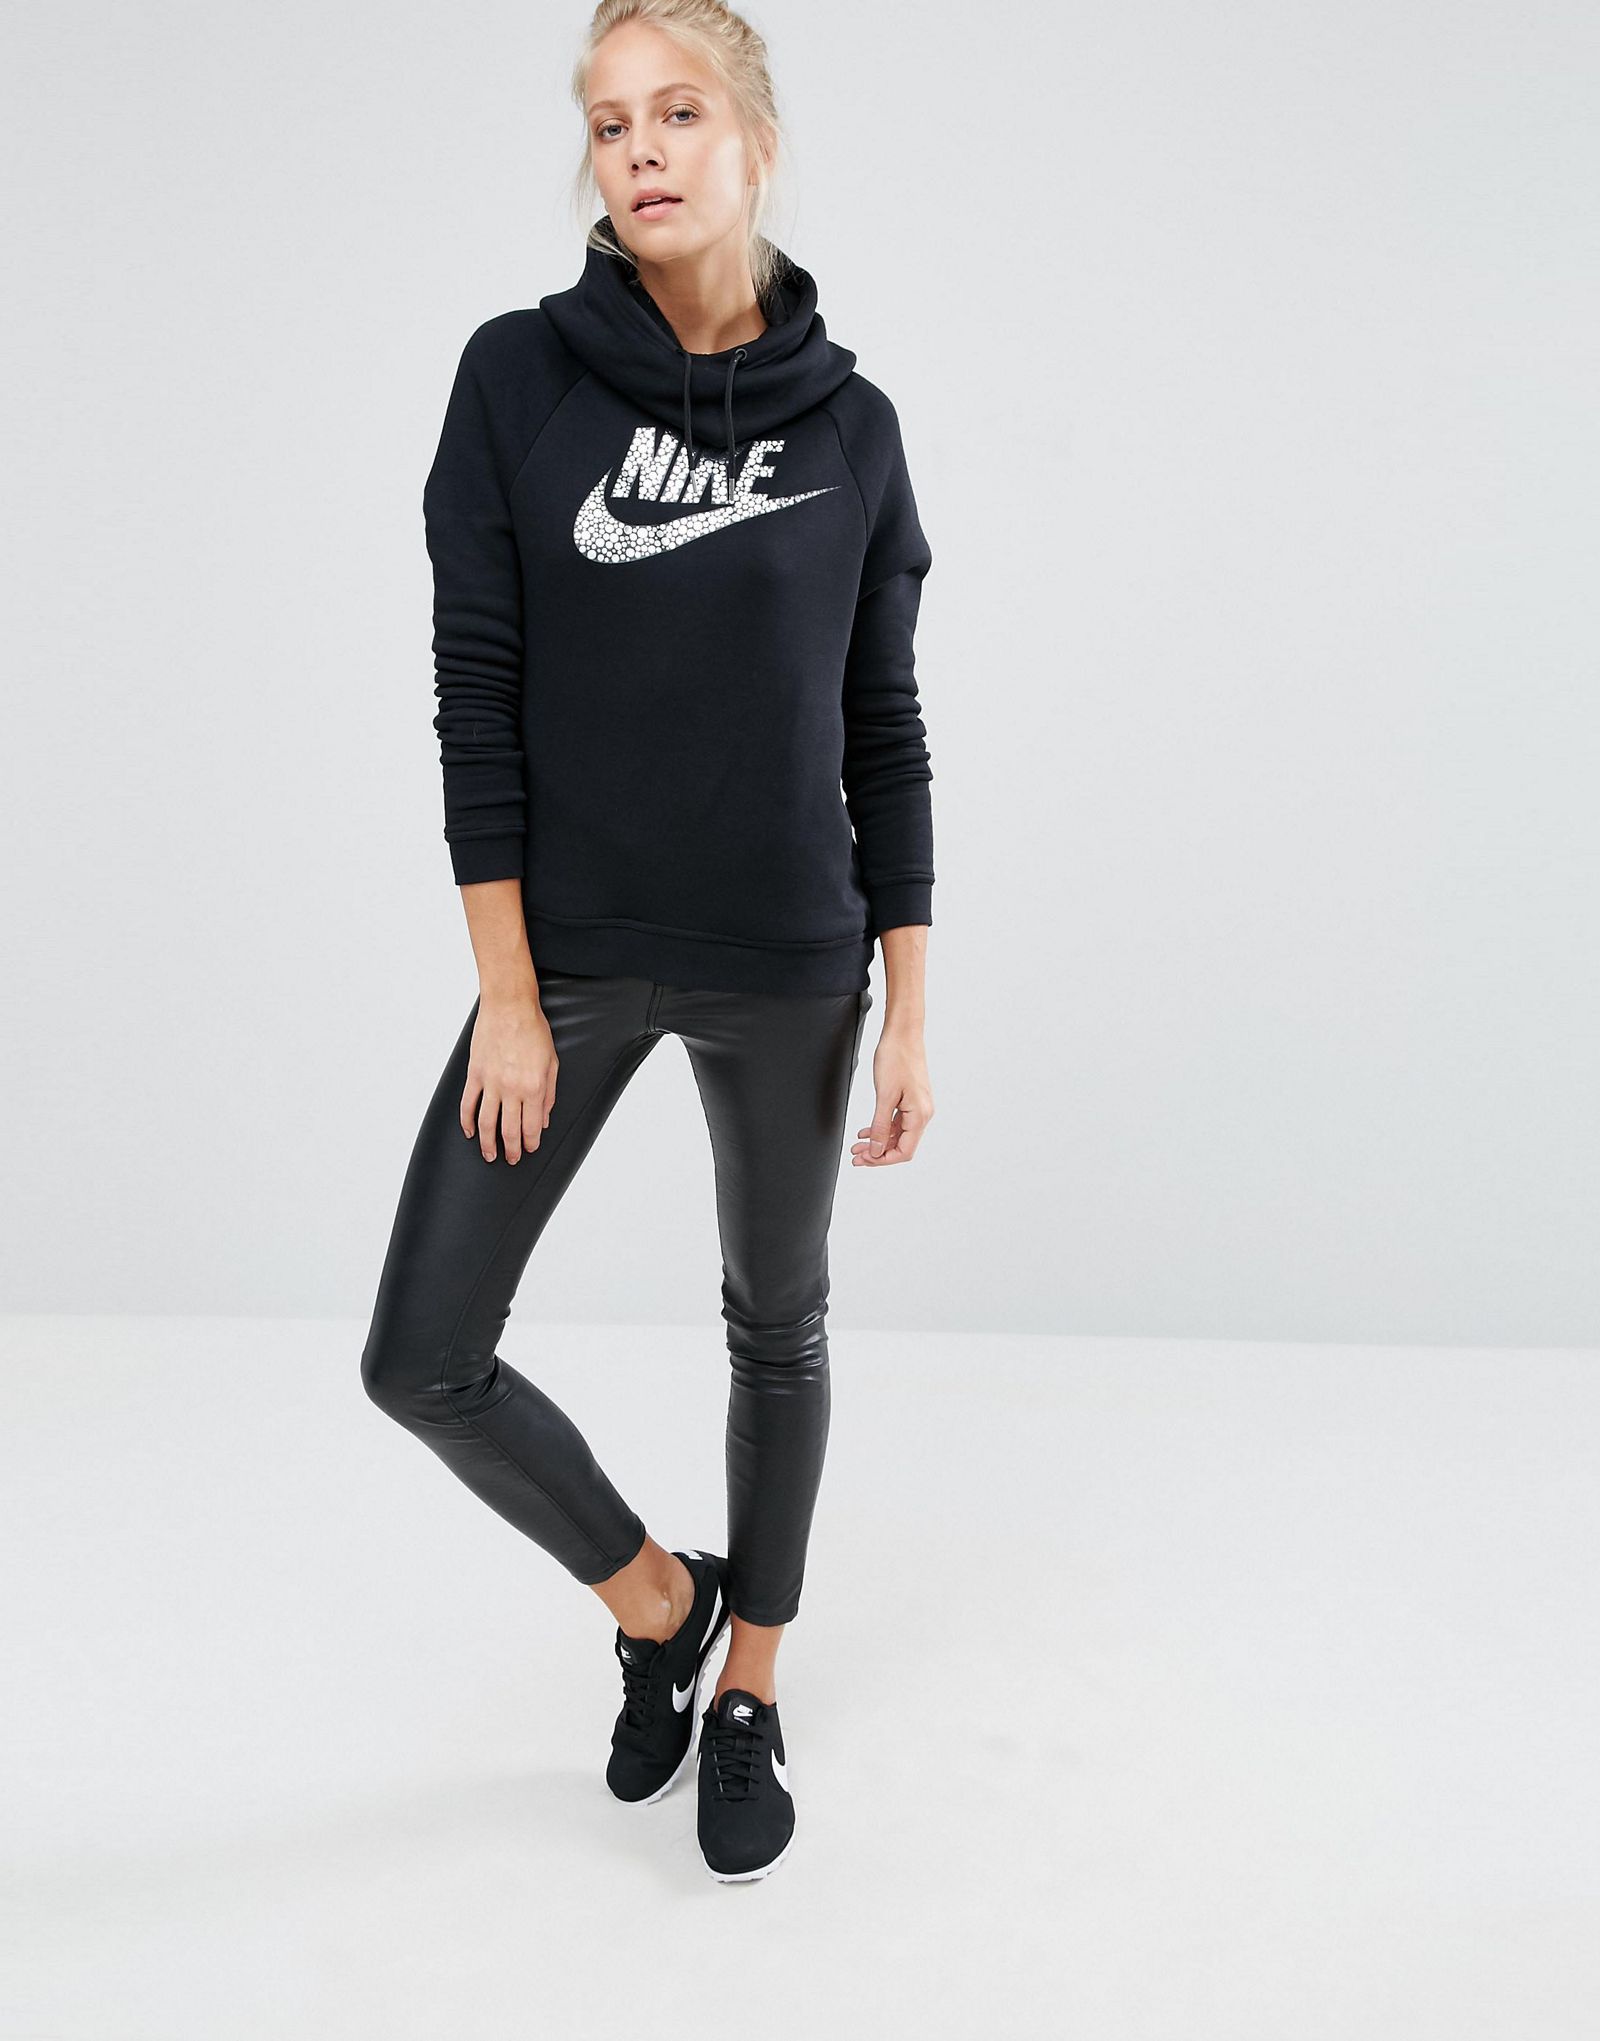 Nike Pullover Hoodie In Black With Large Metallic Futura Logo